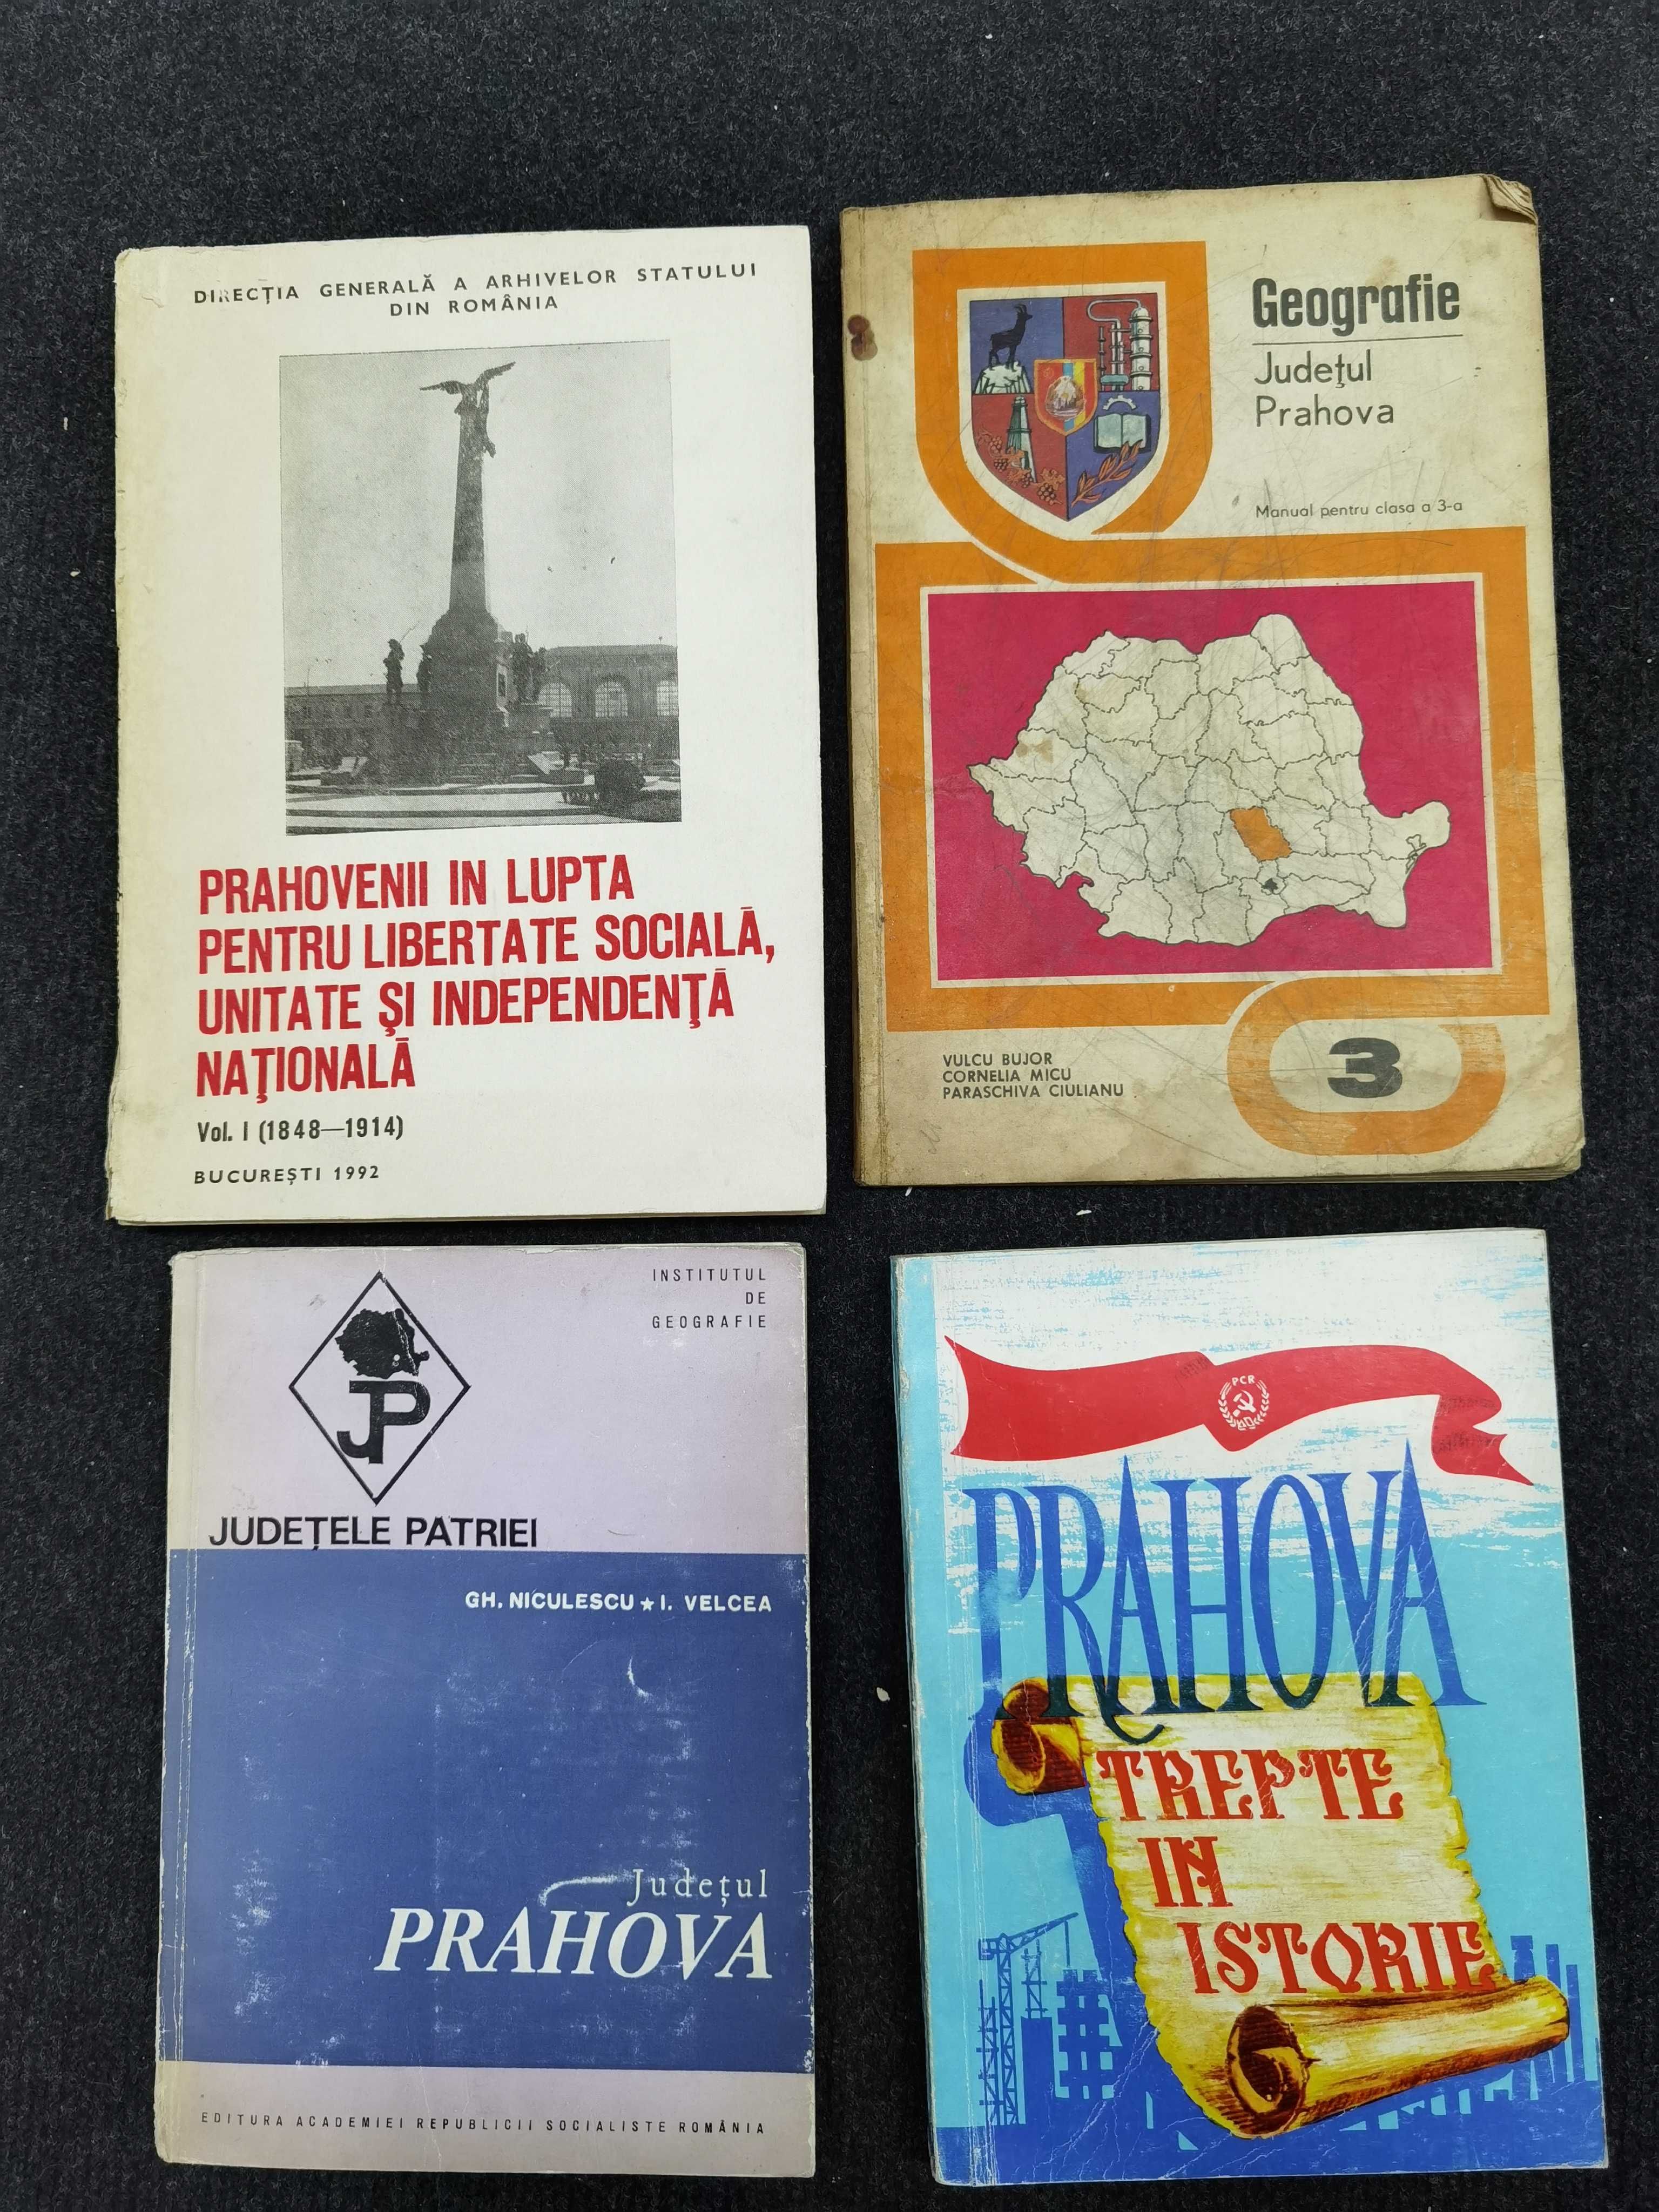 Carti vechi cu Ploiesti, Prahova. (Monografia Ploiesti)